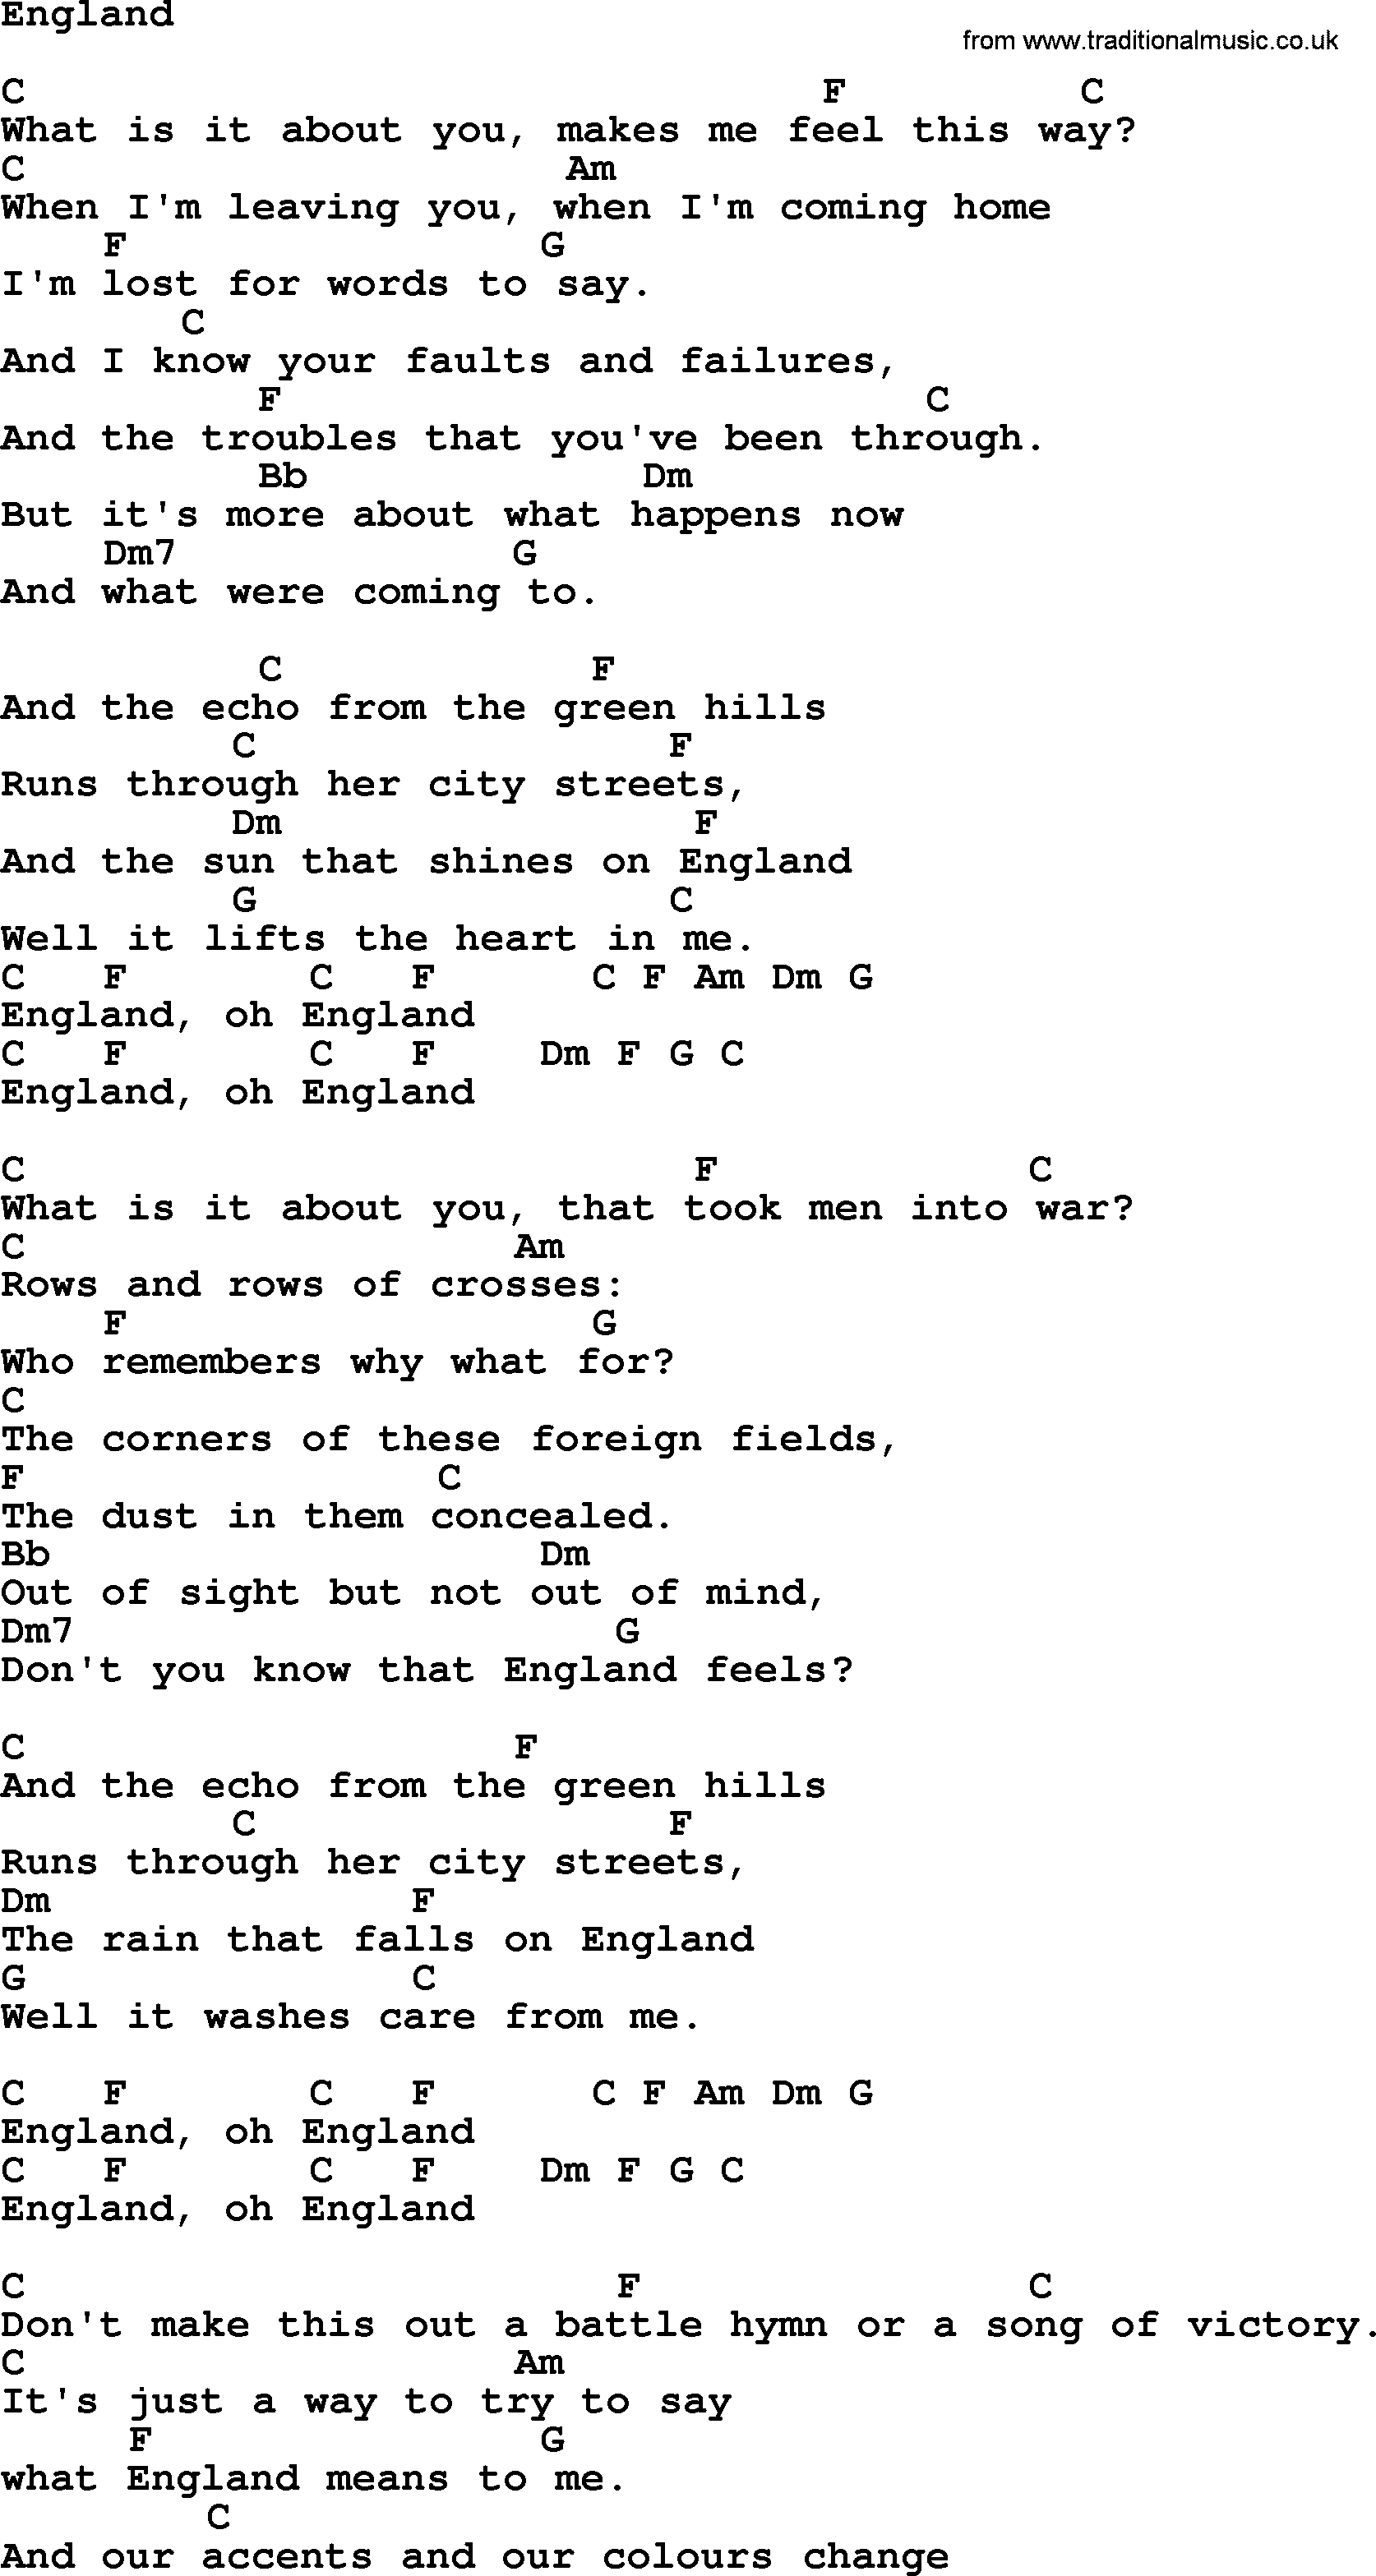 Ralph McTell Song: England, lyrics and chords